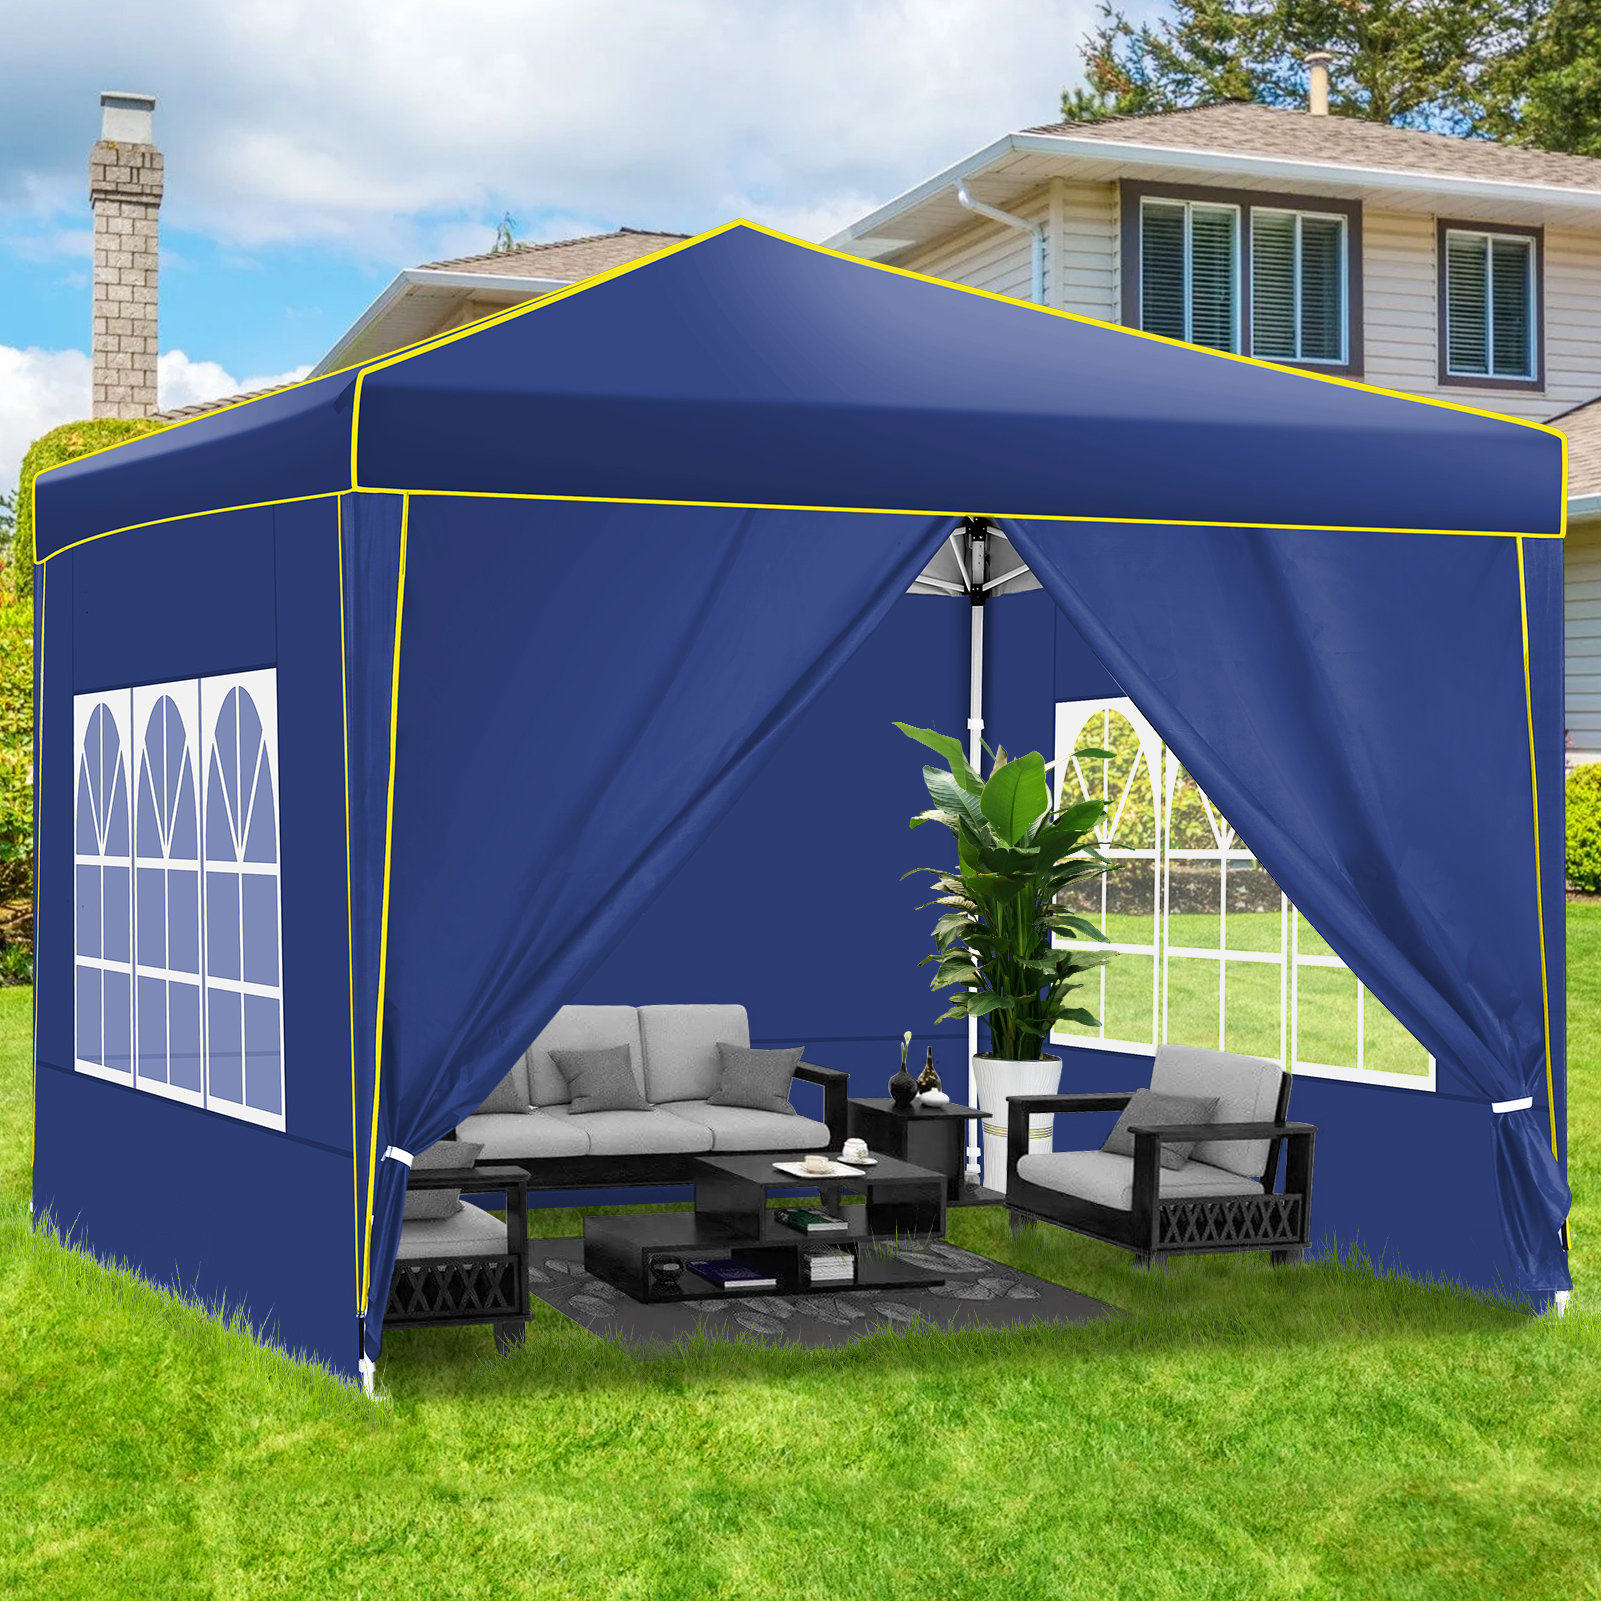 Upf 50 Light Sunshade Pop Up Beach Tent, Portable Premium